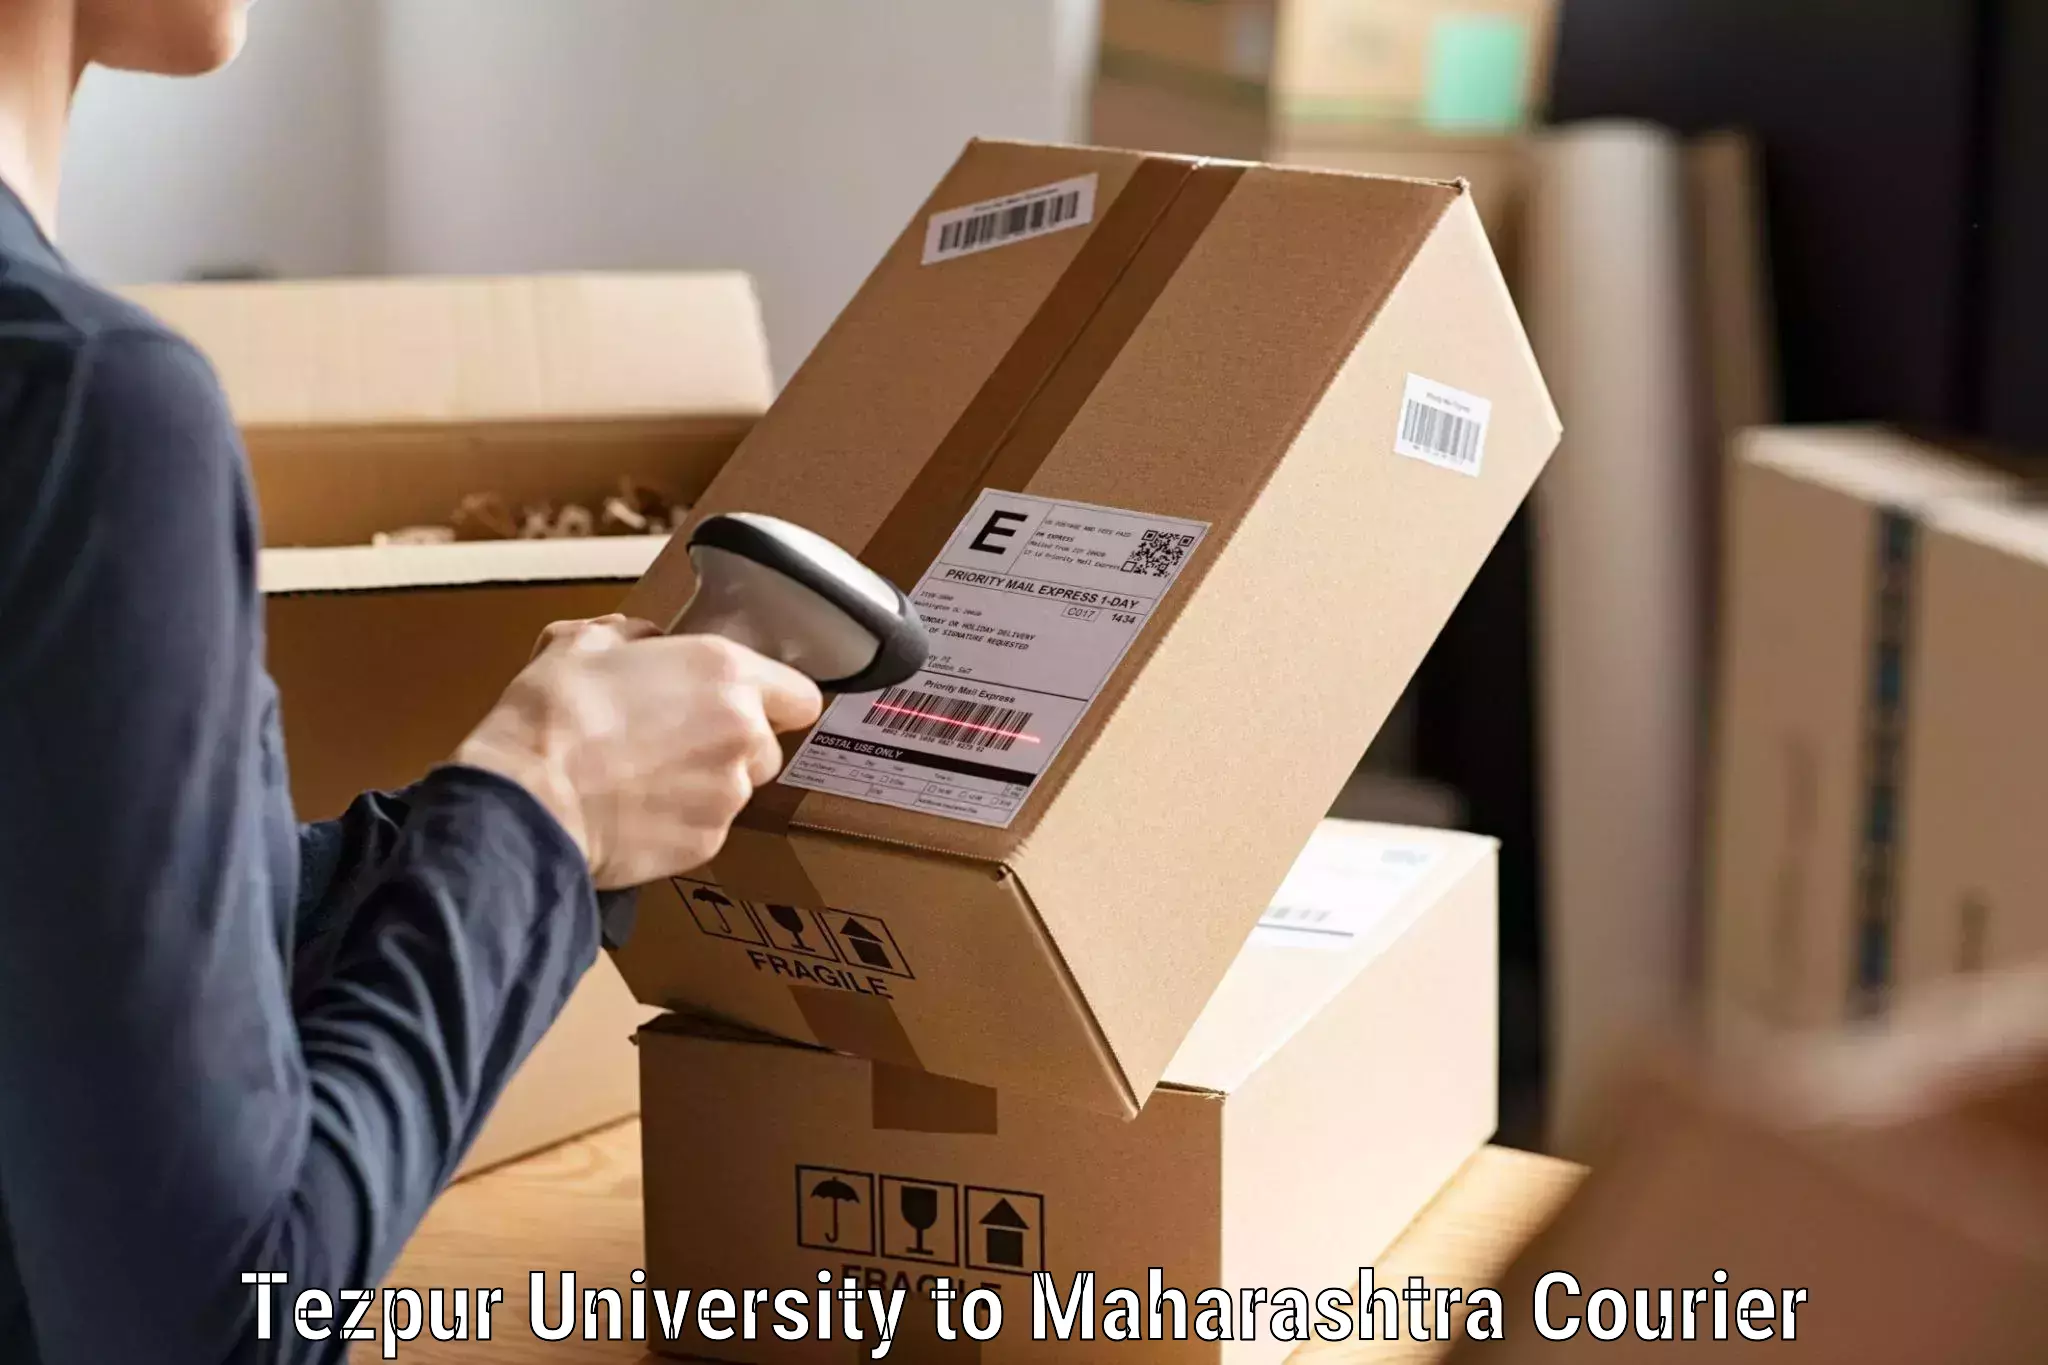 Nationwide shipping capabilities Tezpur University to Maharashtra